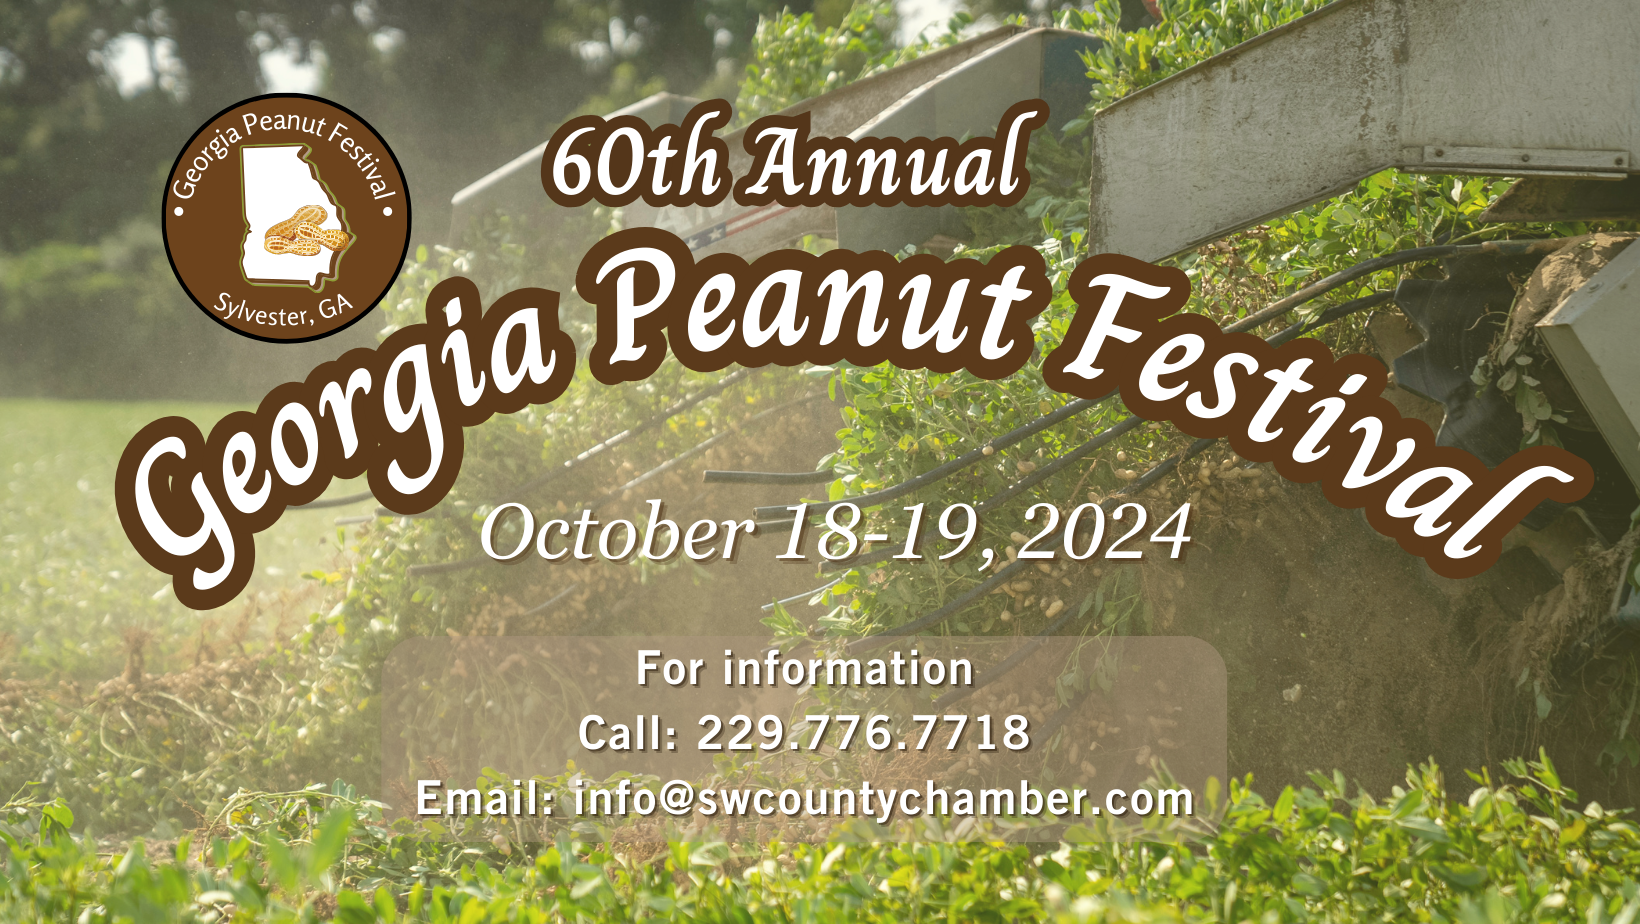 60th Annual Georgia Peanut Festival October 18-19, 2024. Flyer